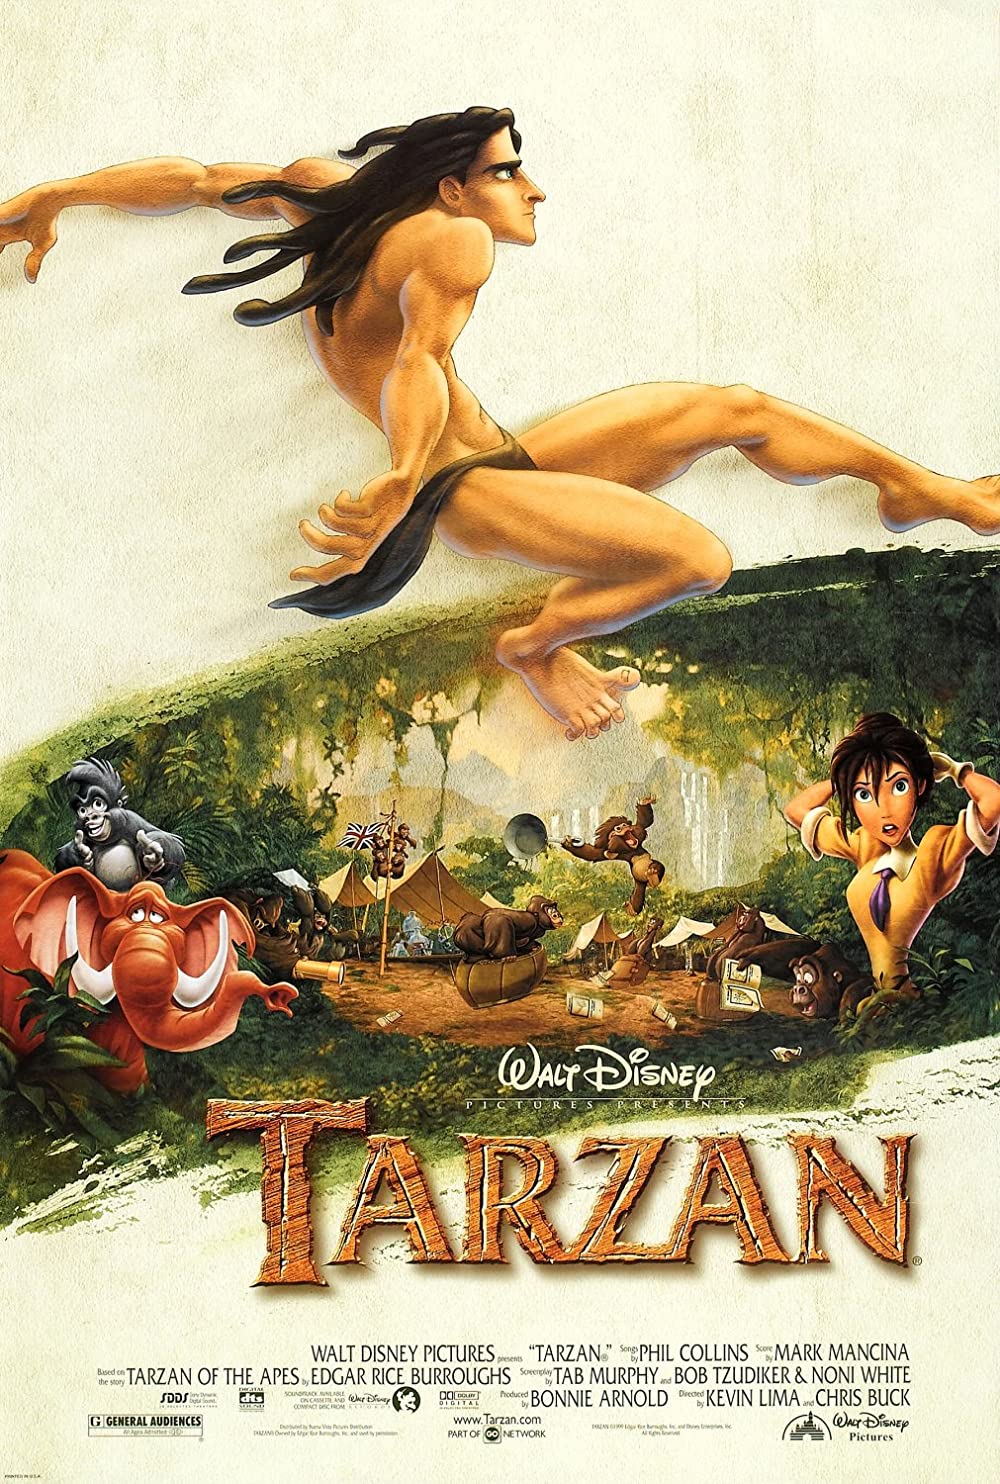 Filmbeschreibung zu Tarzan (1999)